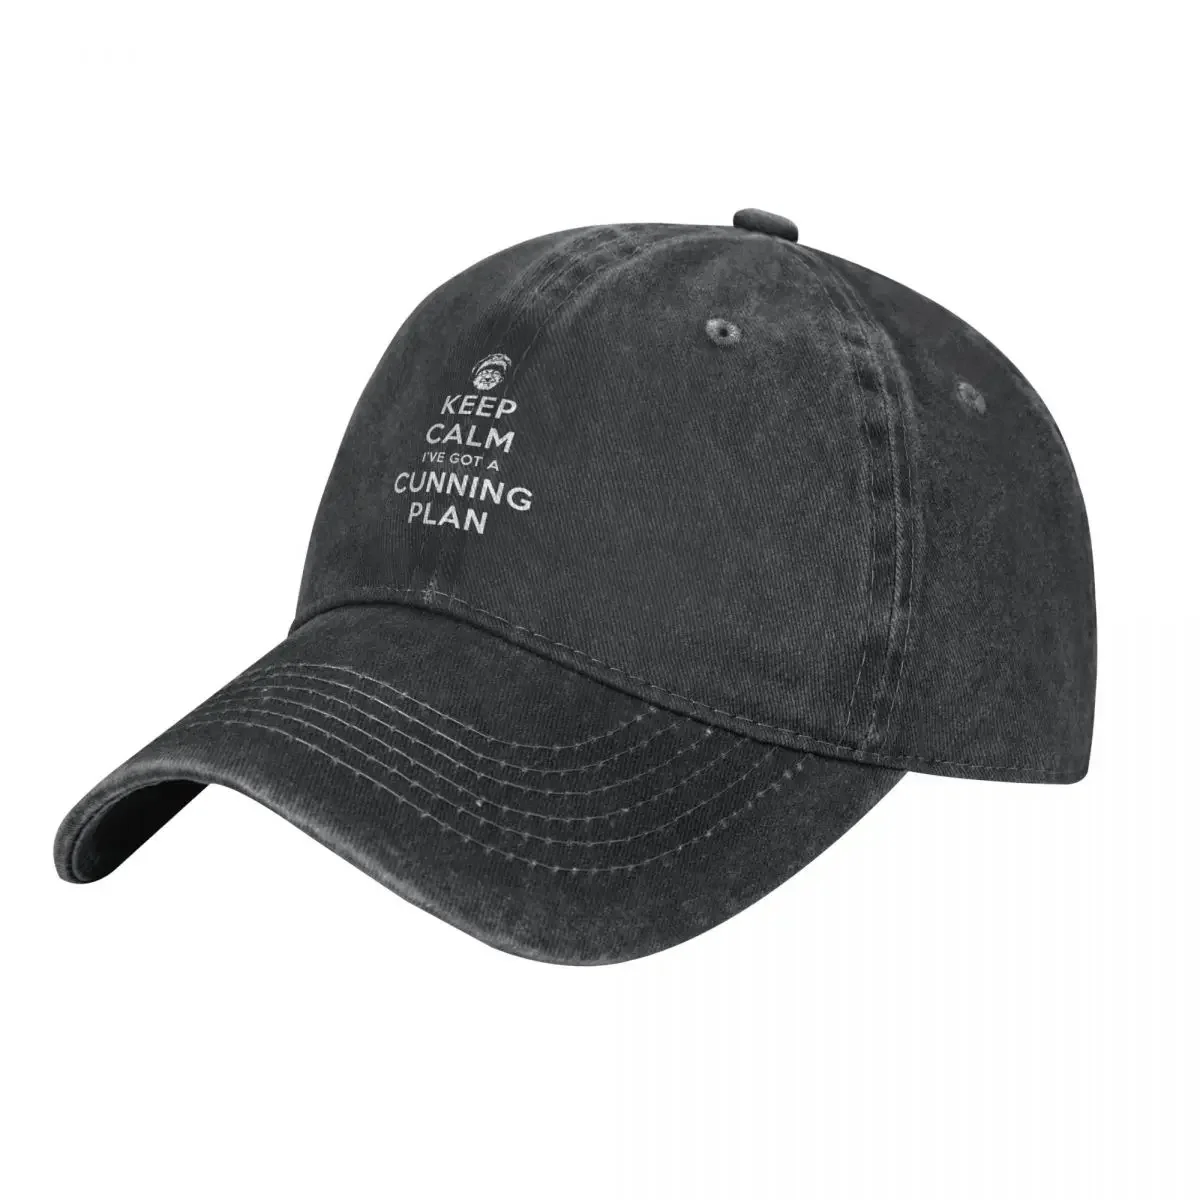 

Keep Calm I've Got A Cunning Plan - Distressed Design Cowboy Hat Golf Wear party Hat dad hat Ladies Men's